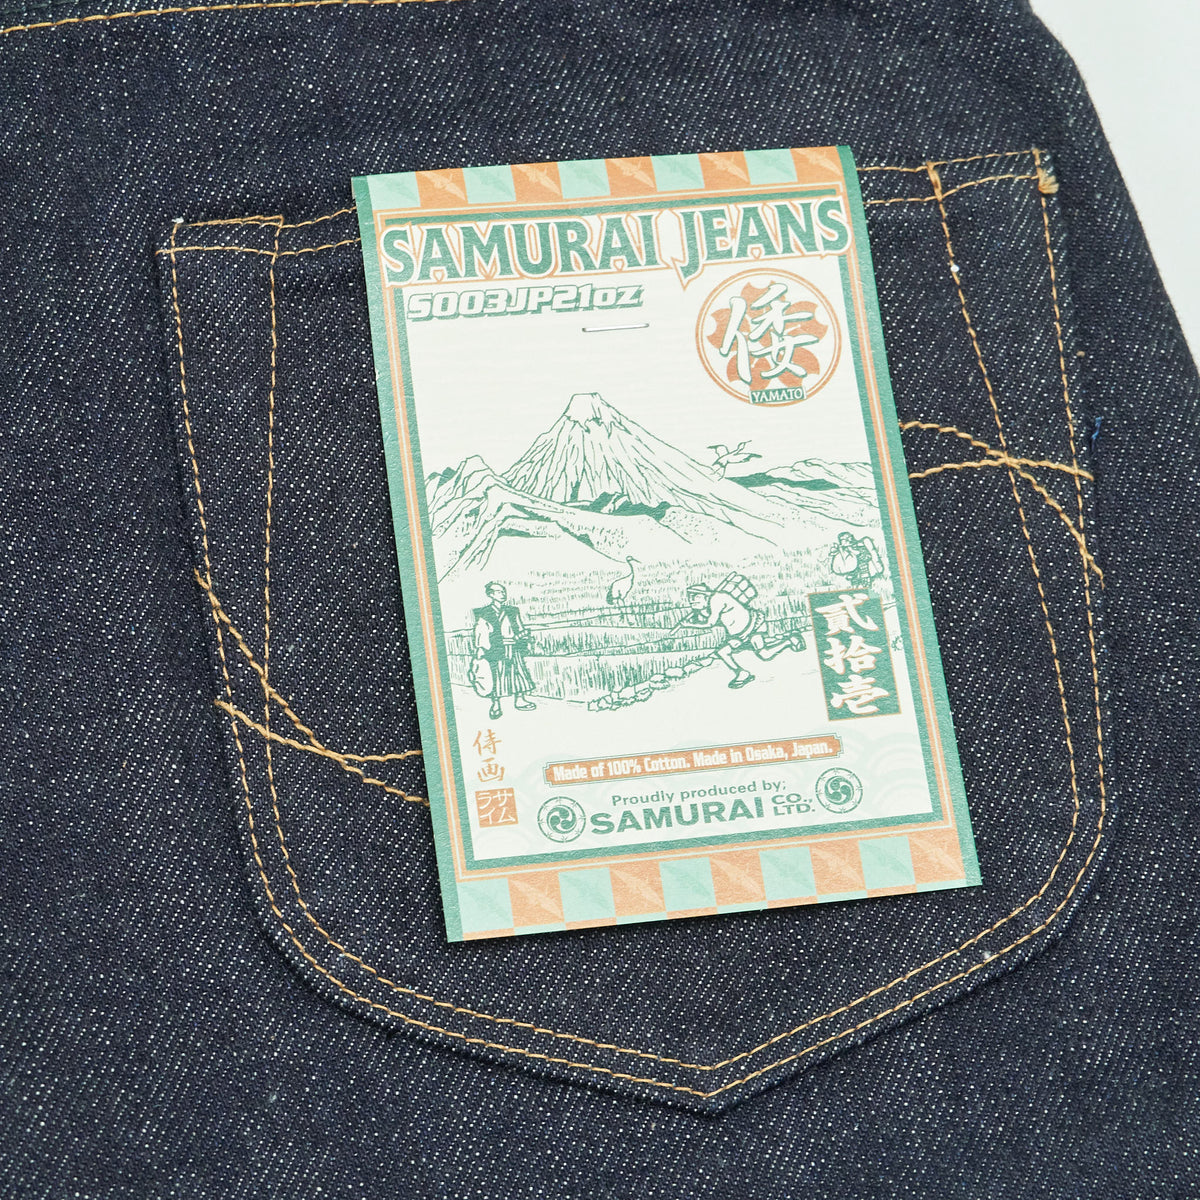 Samurai Jeans Tight Straight 21oz Selvage Denim Jeans